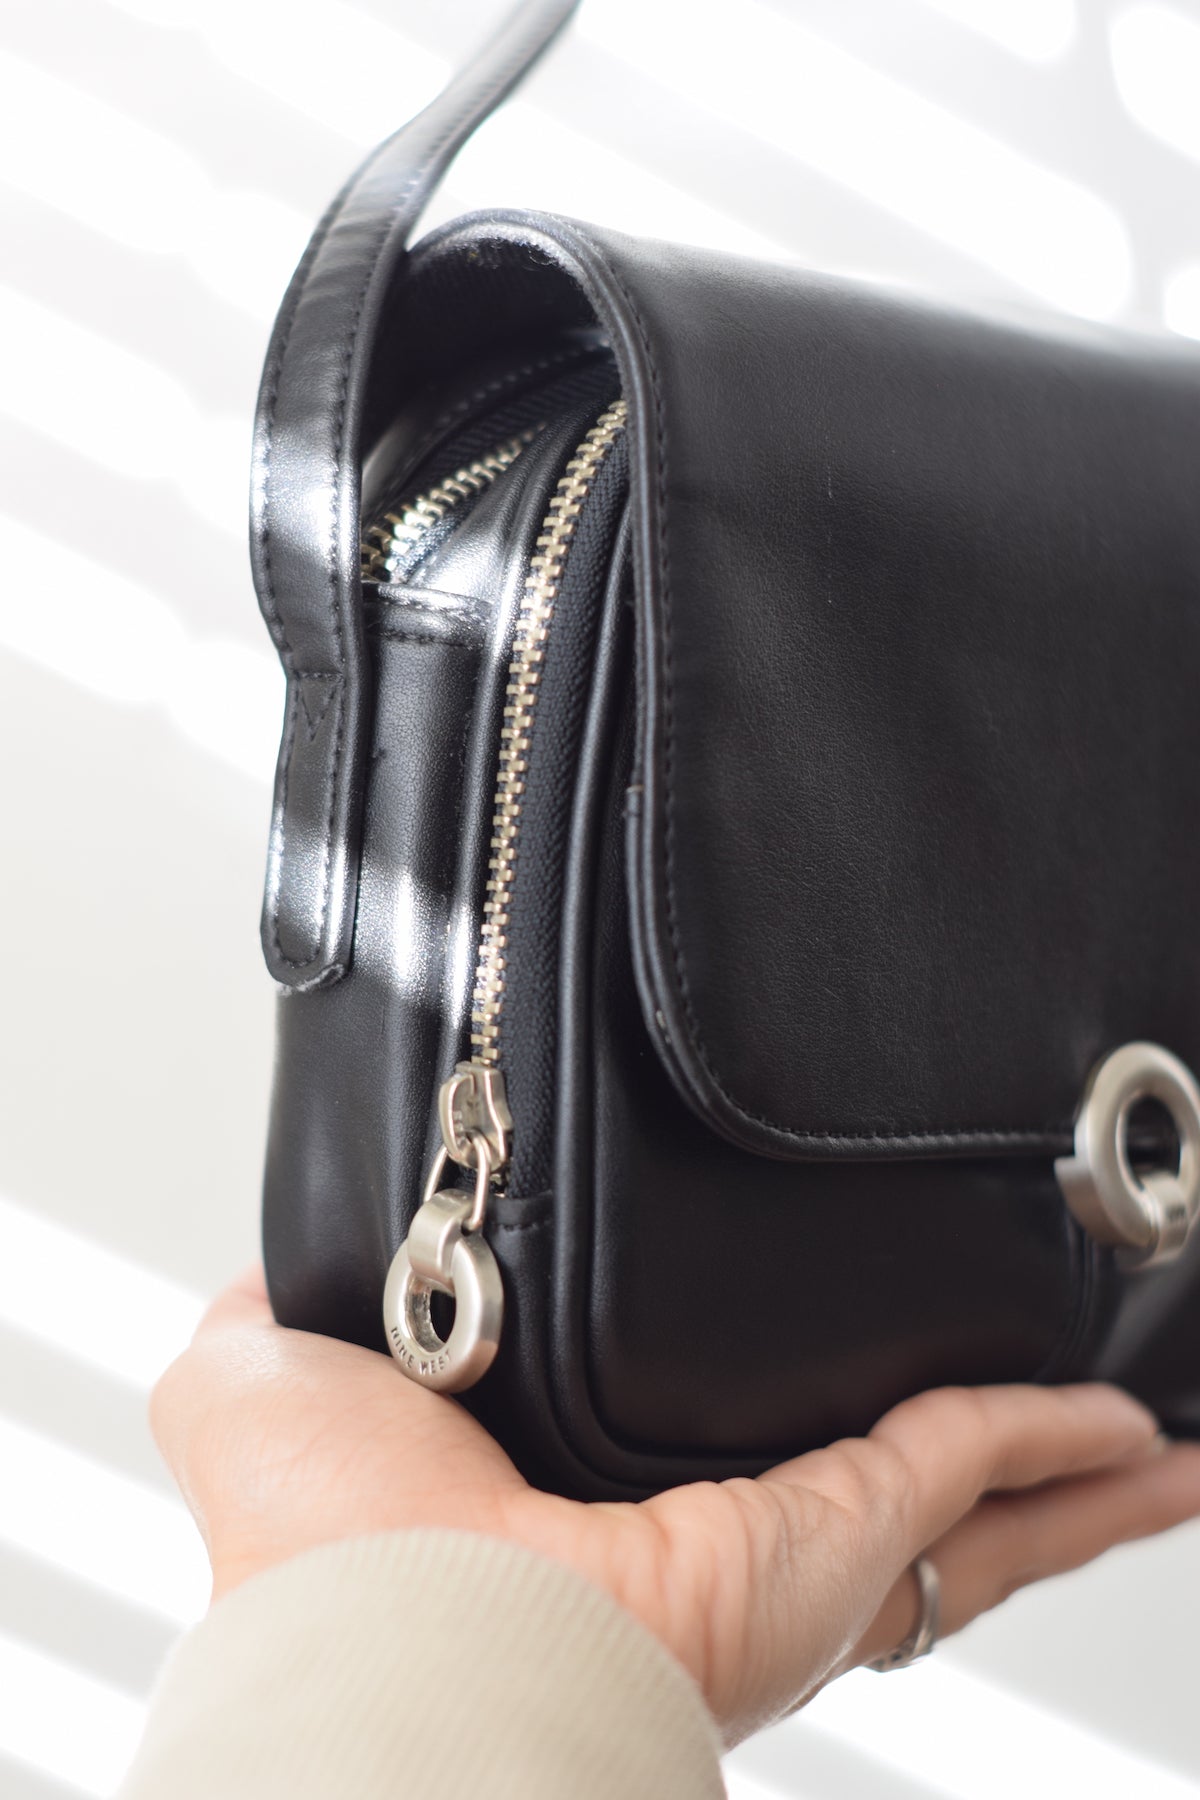 Nine West Black Purse Crossbody Shoulder Bag Silver Hardware Zip | eBay